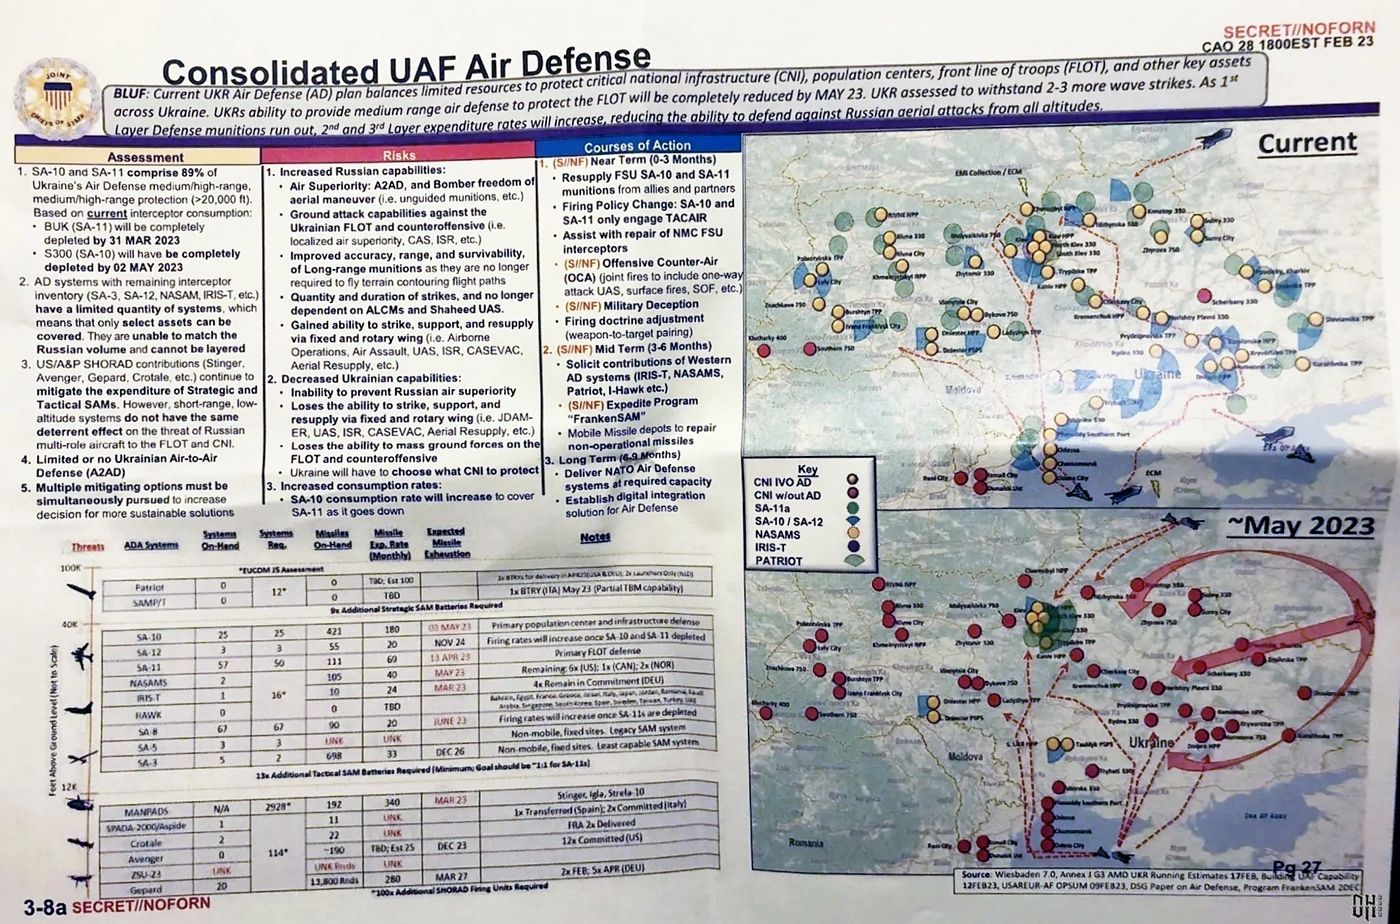 DH - Leaked Pentagon Documents Re War in Ukraine 6 - Apr 2023.jpg